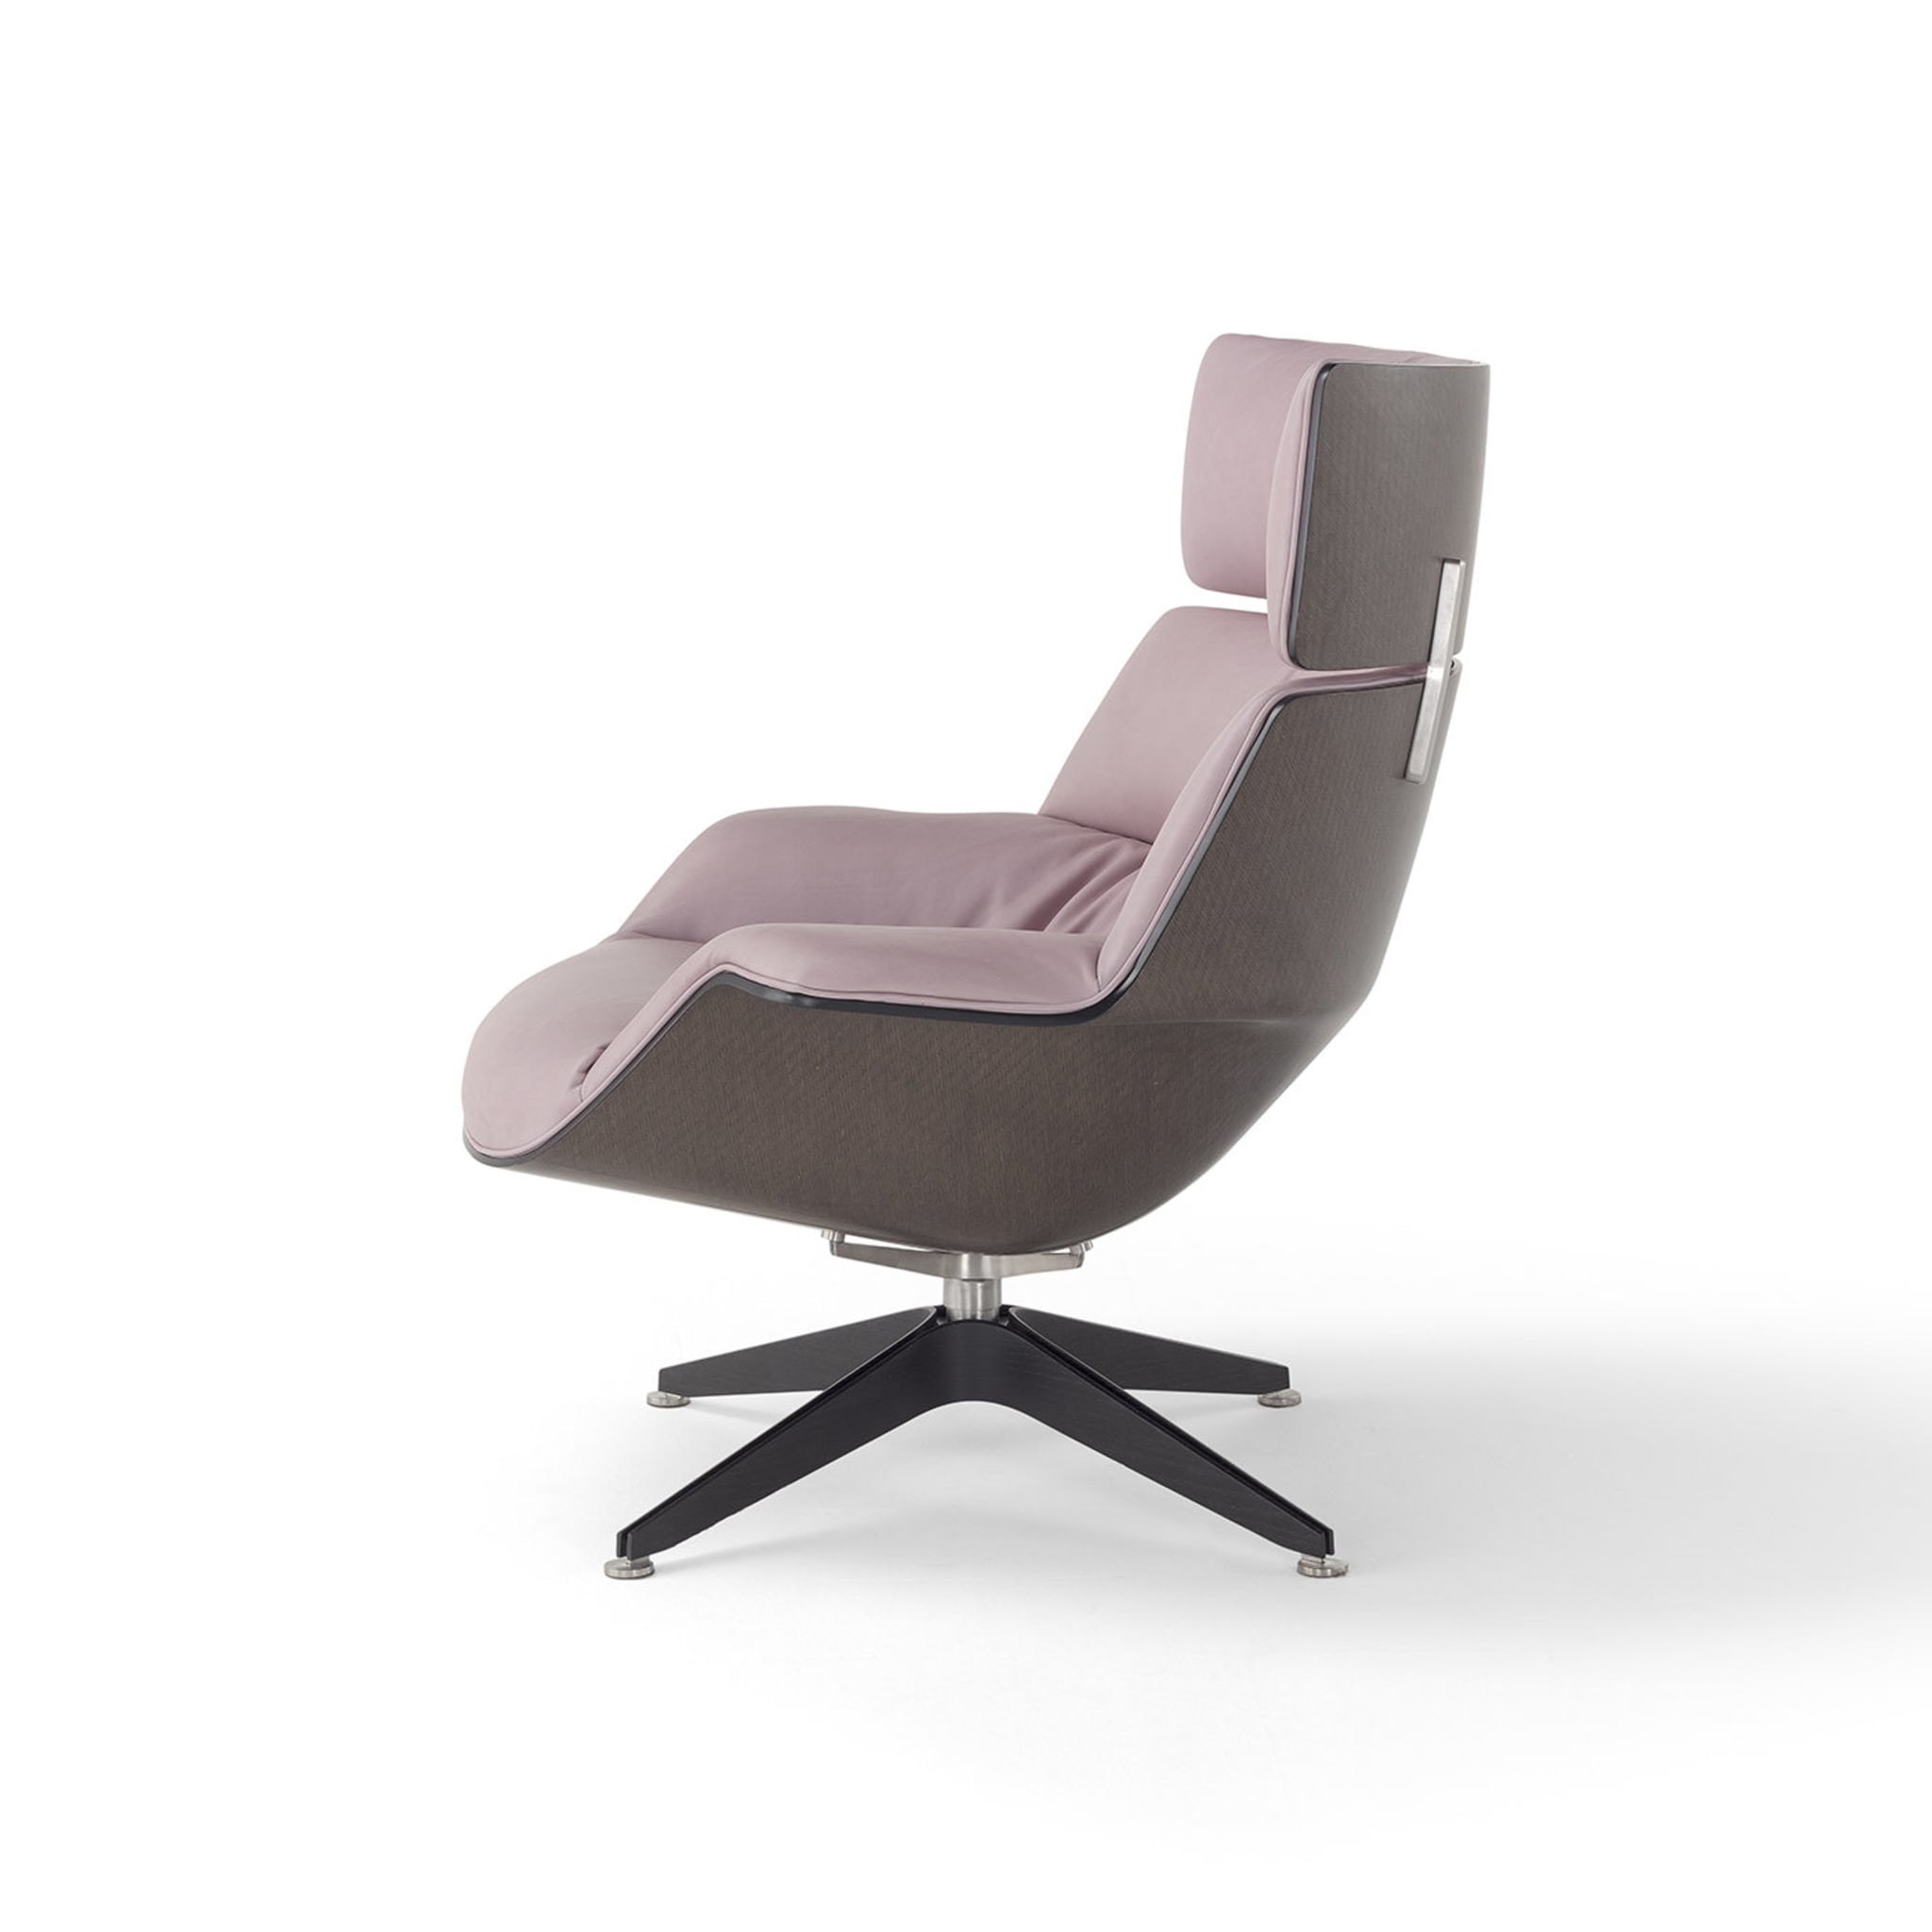 Saintluc Coach Lounge Chair Pink by Jean-Marie Massaud - Alternative view 2